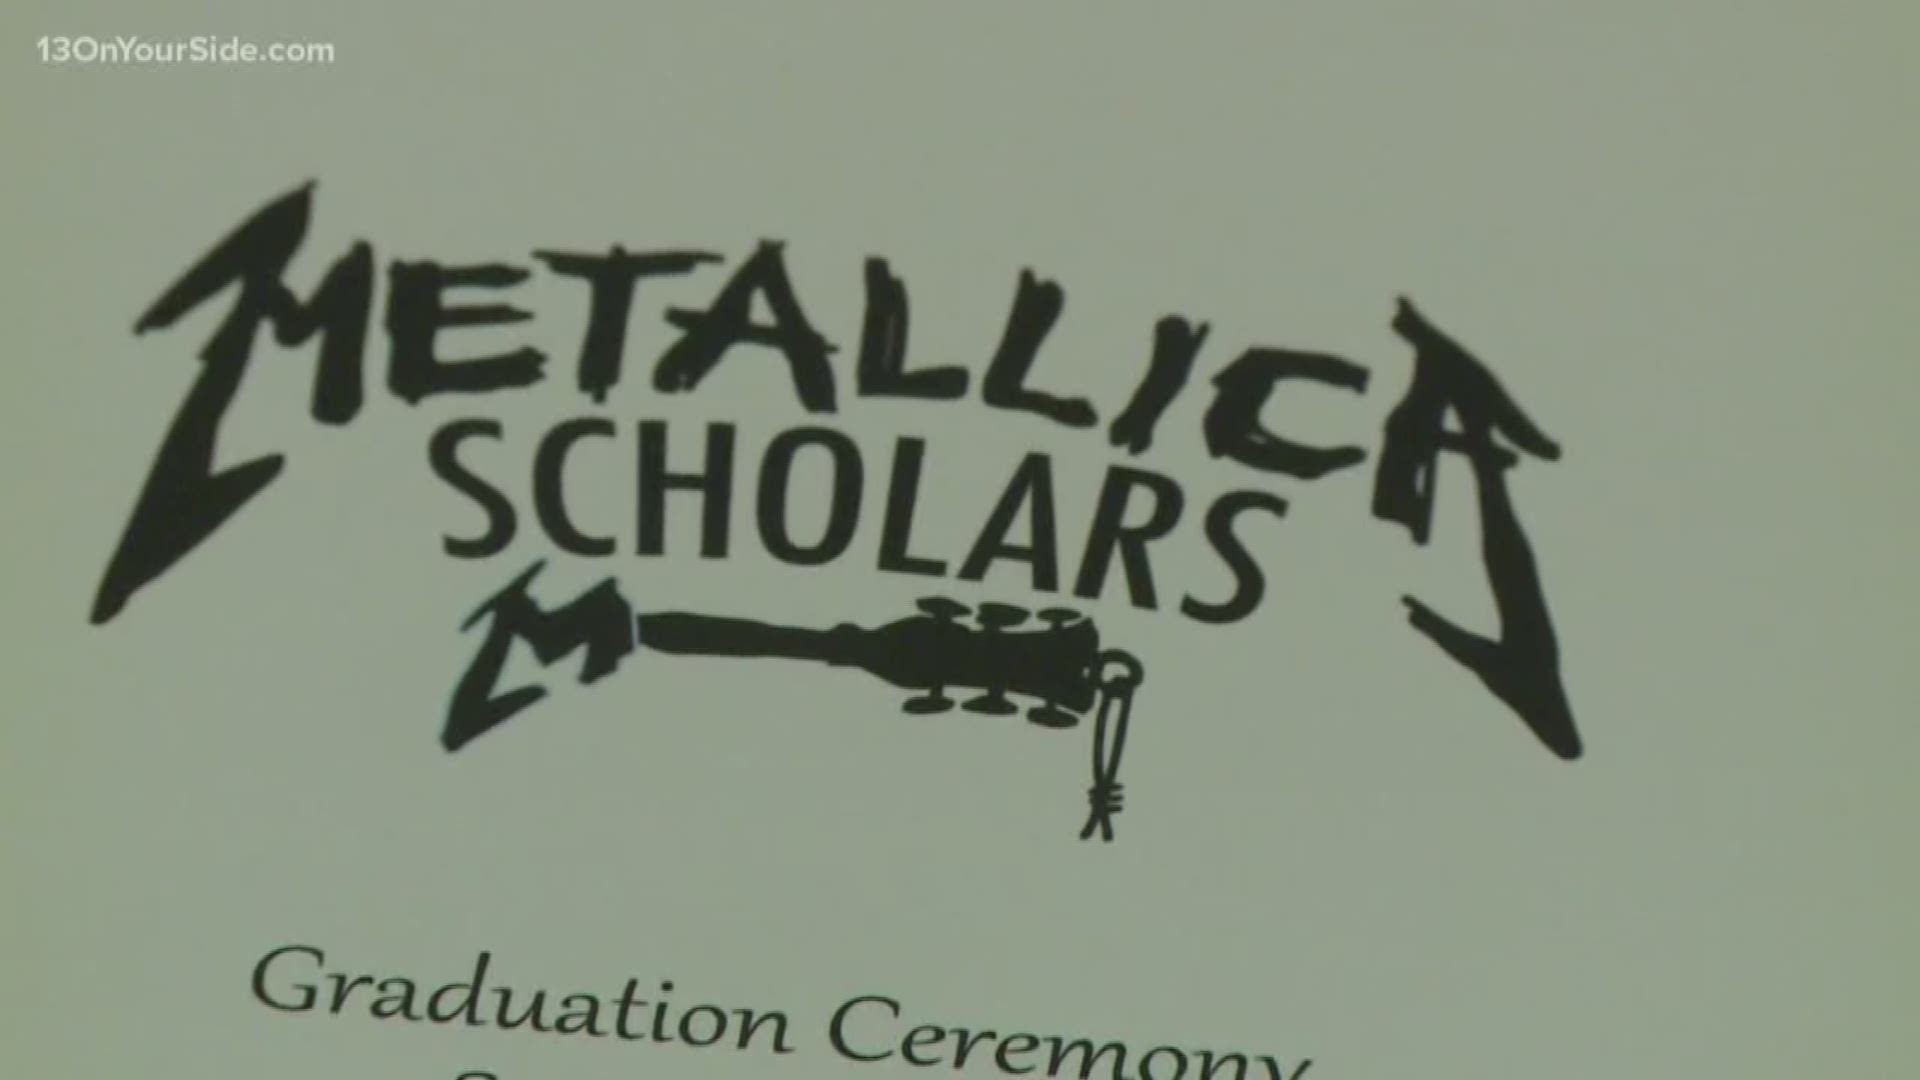 Metallica scholars program graduates first class